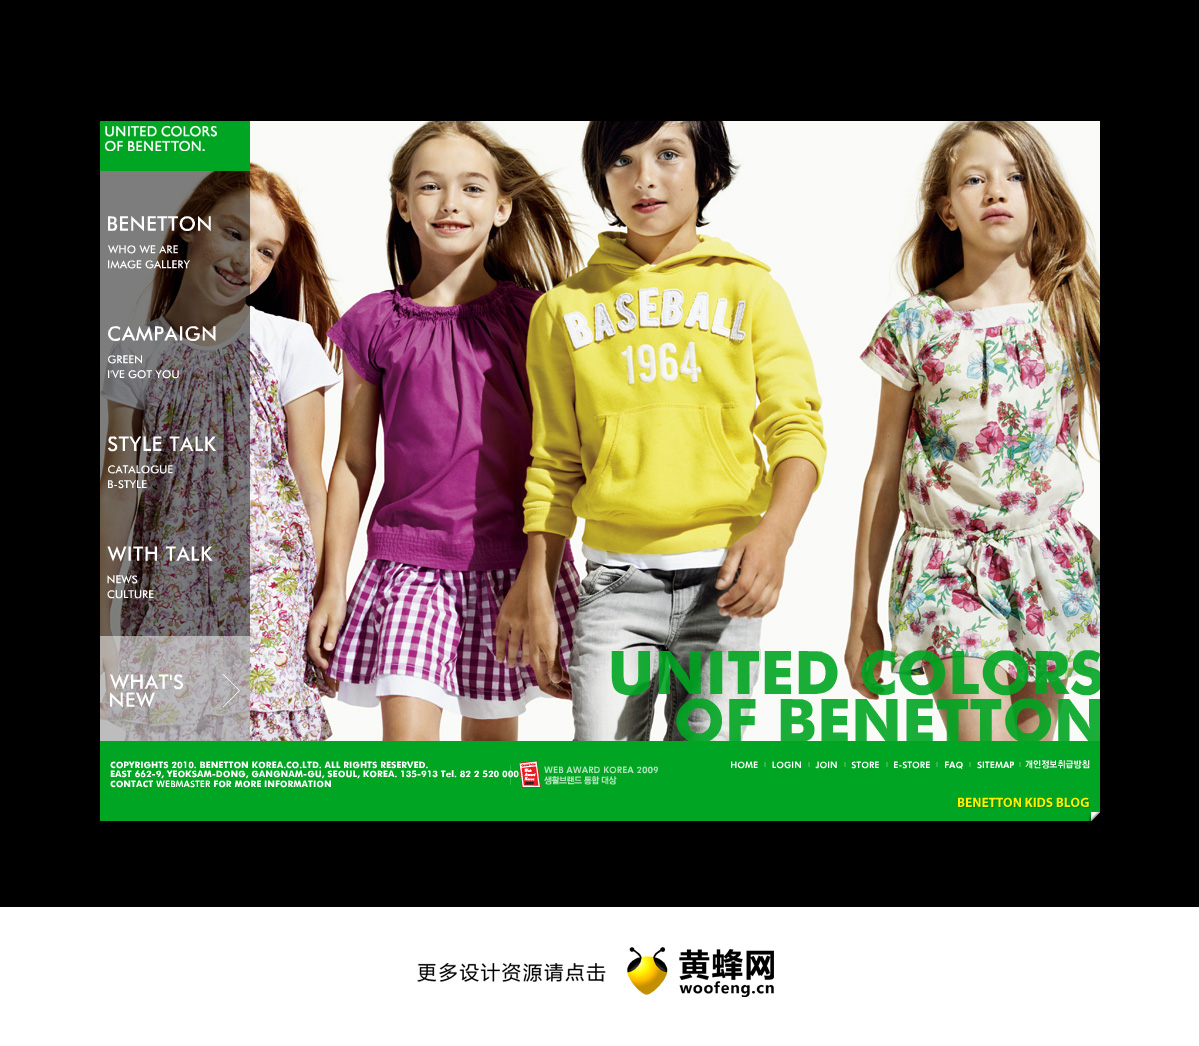 BENETTON KIDS童装网站，来源自黄蜂网https://woofeng.cn/web